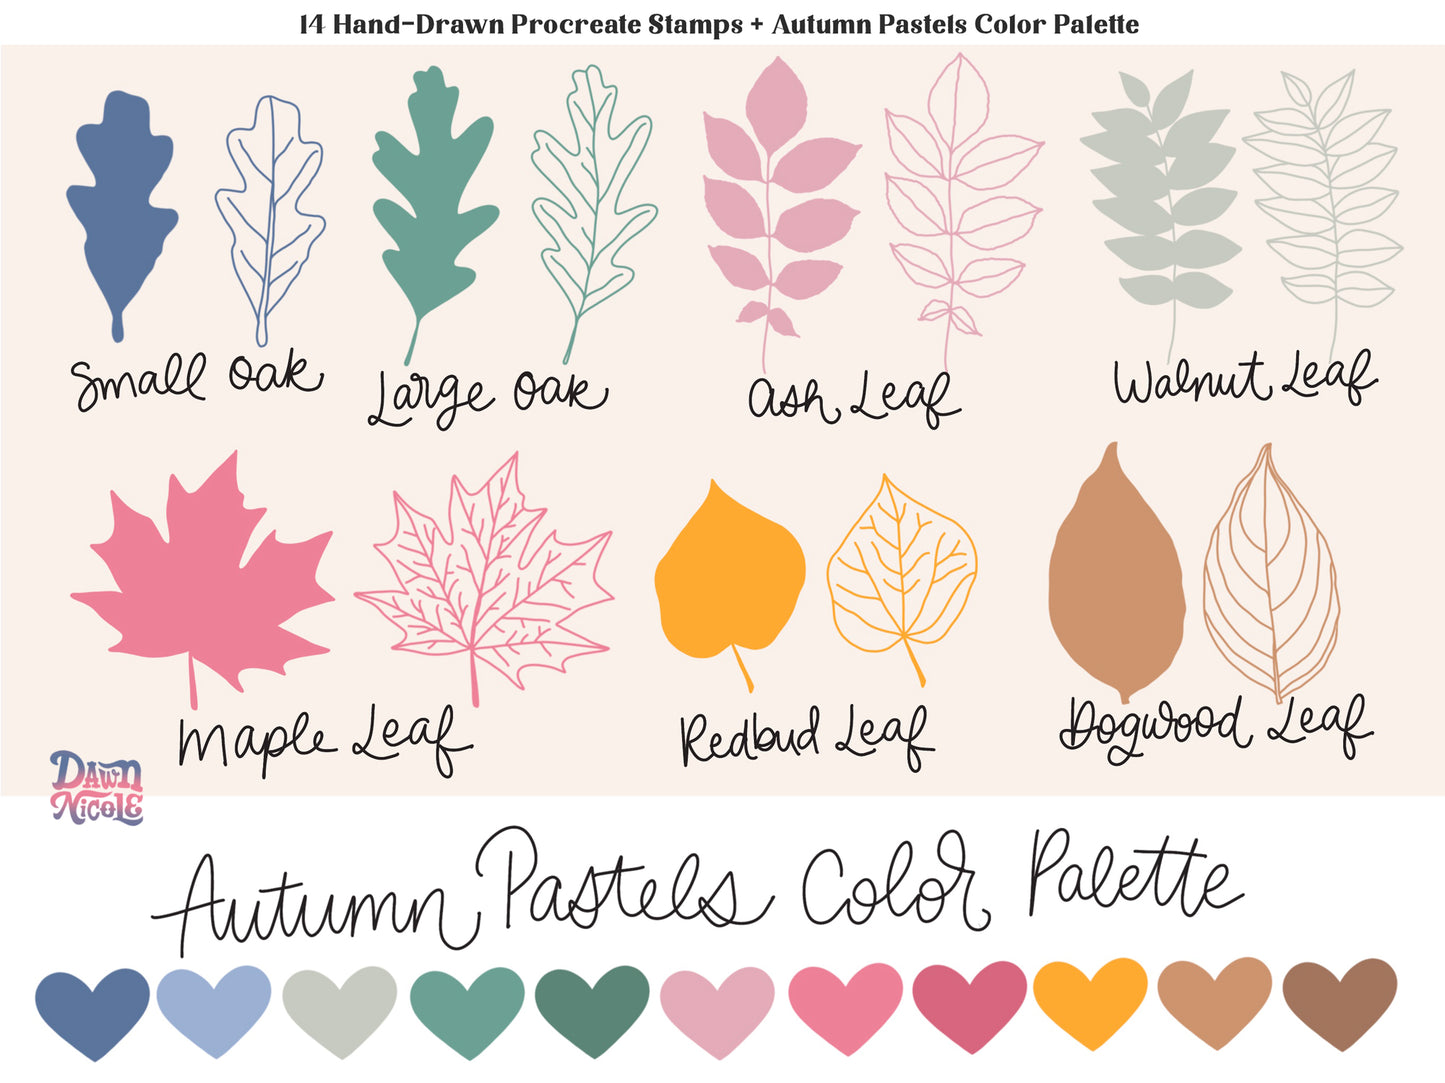 Fall Leaves Mini Stamp Kit for Procreate